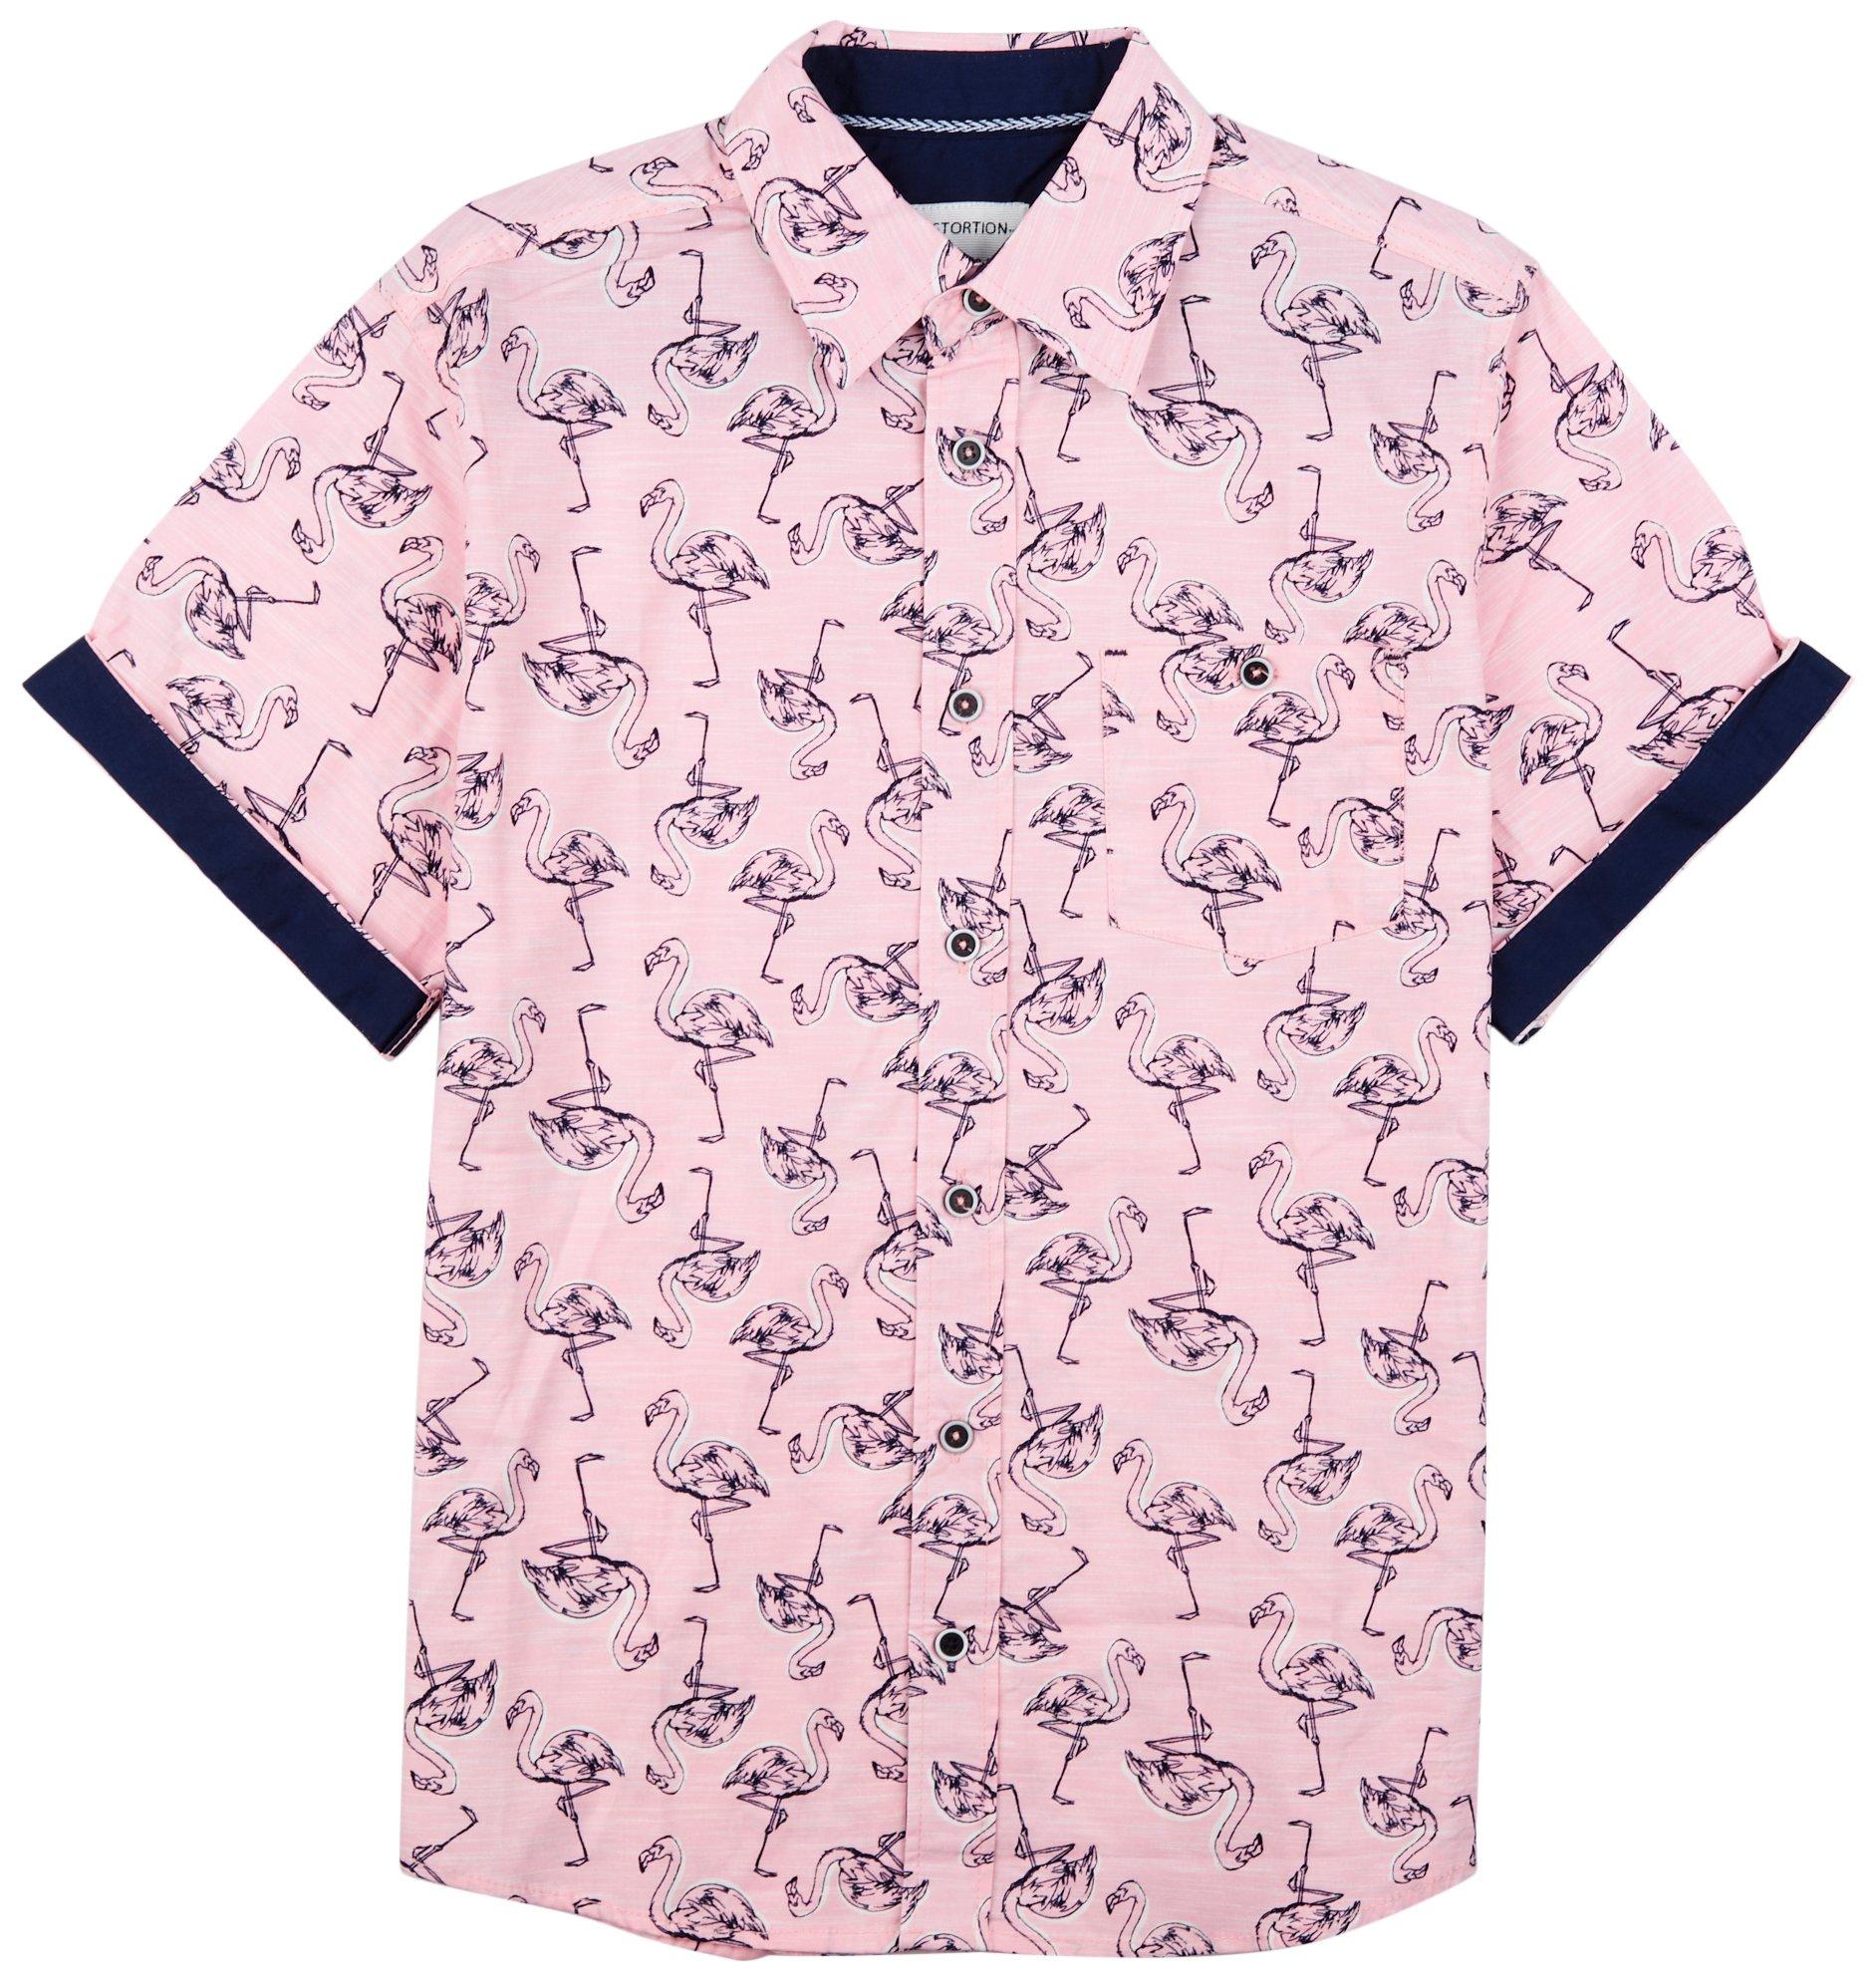 Big Boys Flamingo Woven Sleeve Shirt